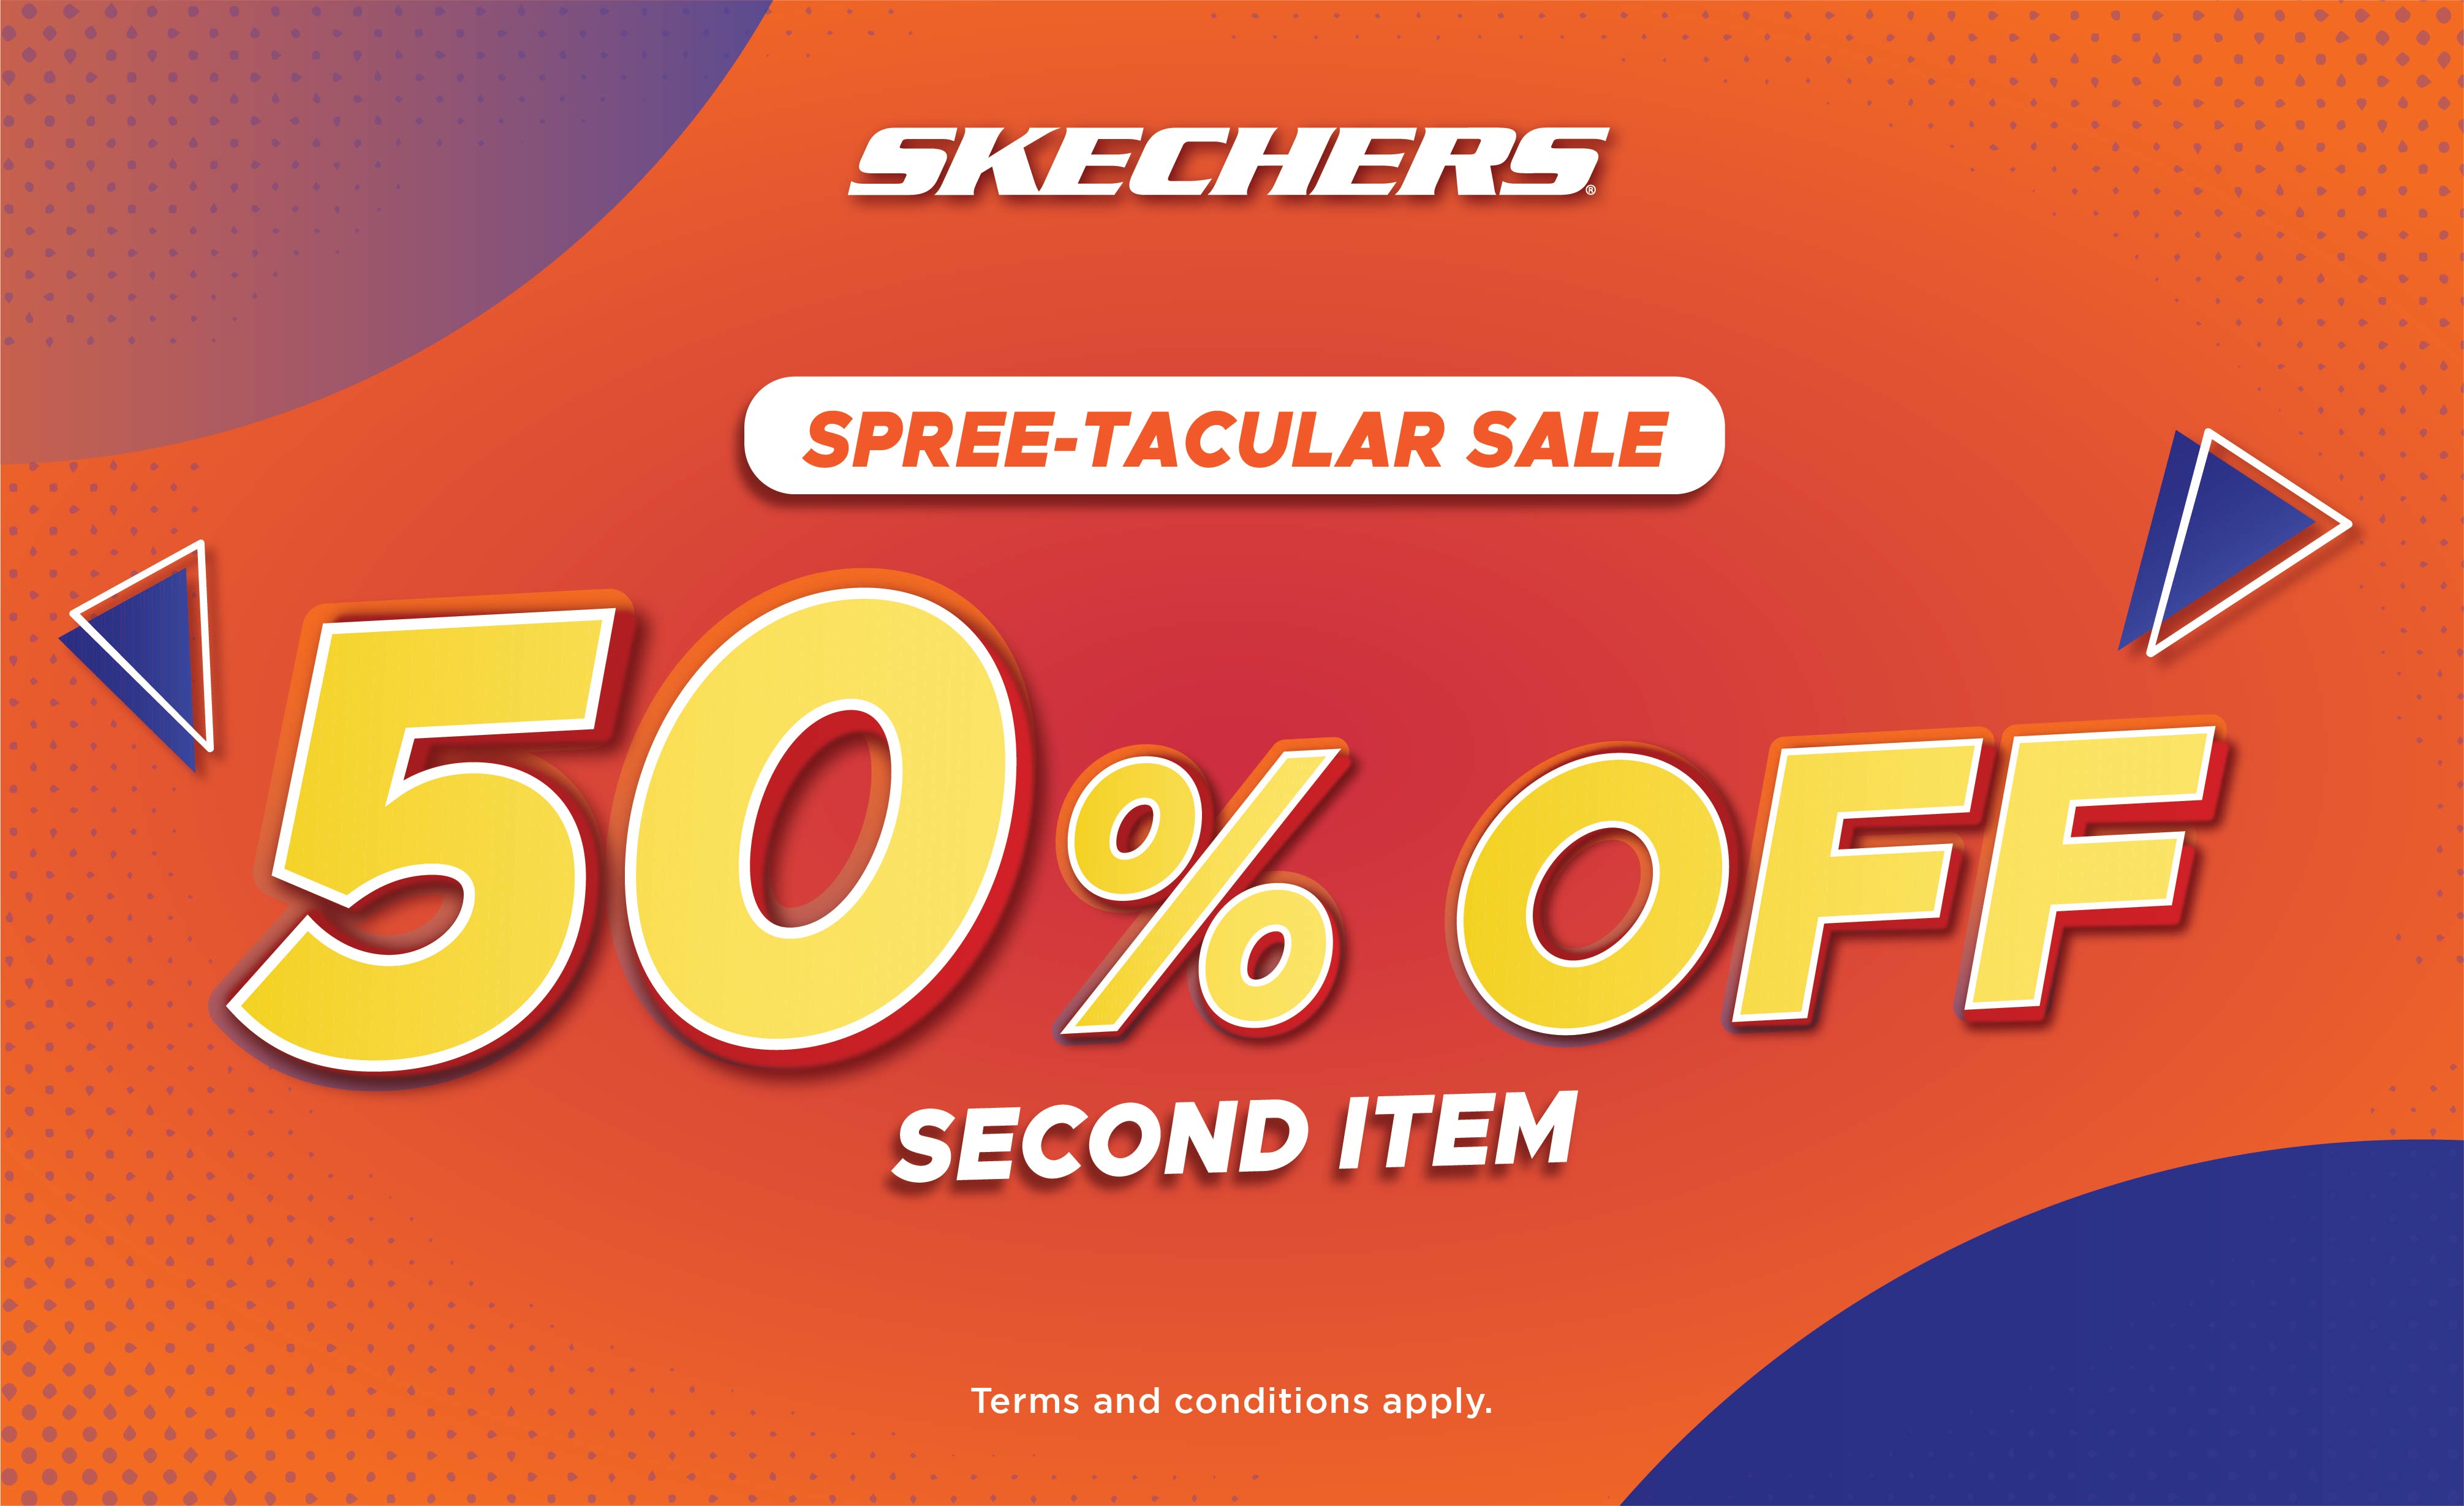 [Skechers] 50% Off Second Item